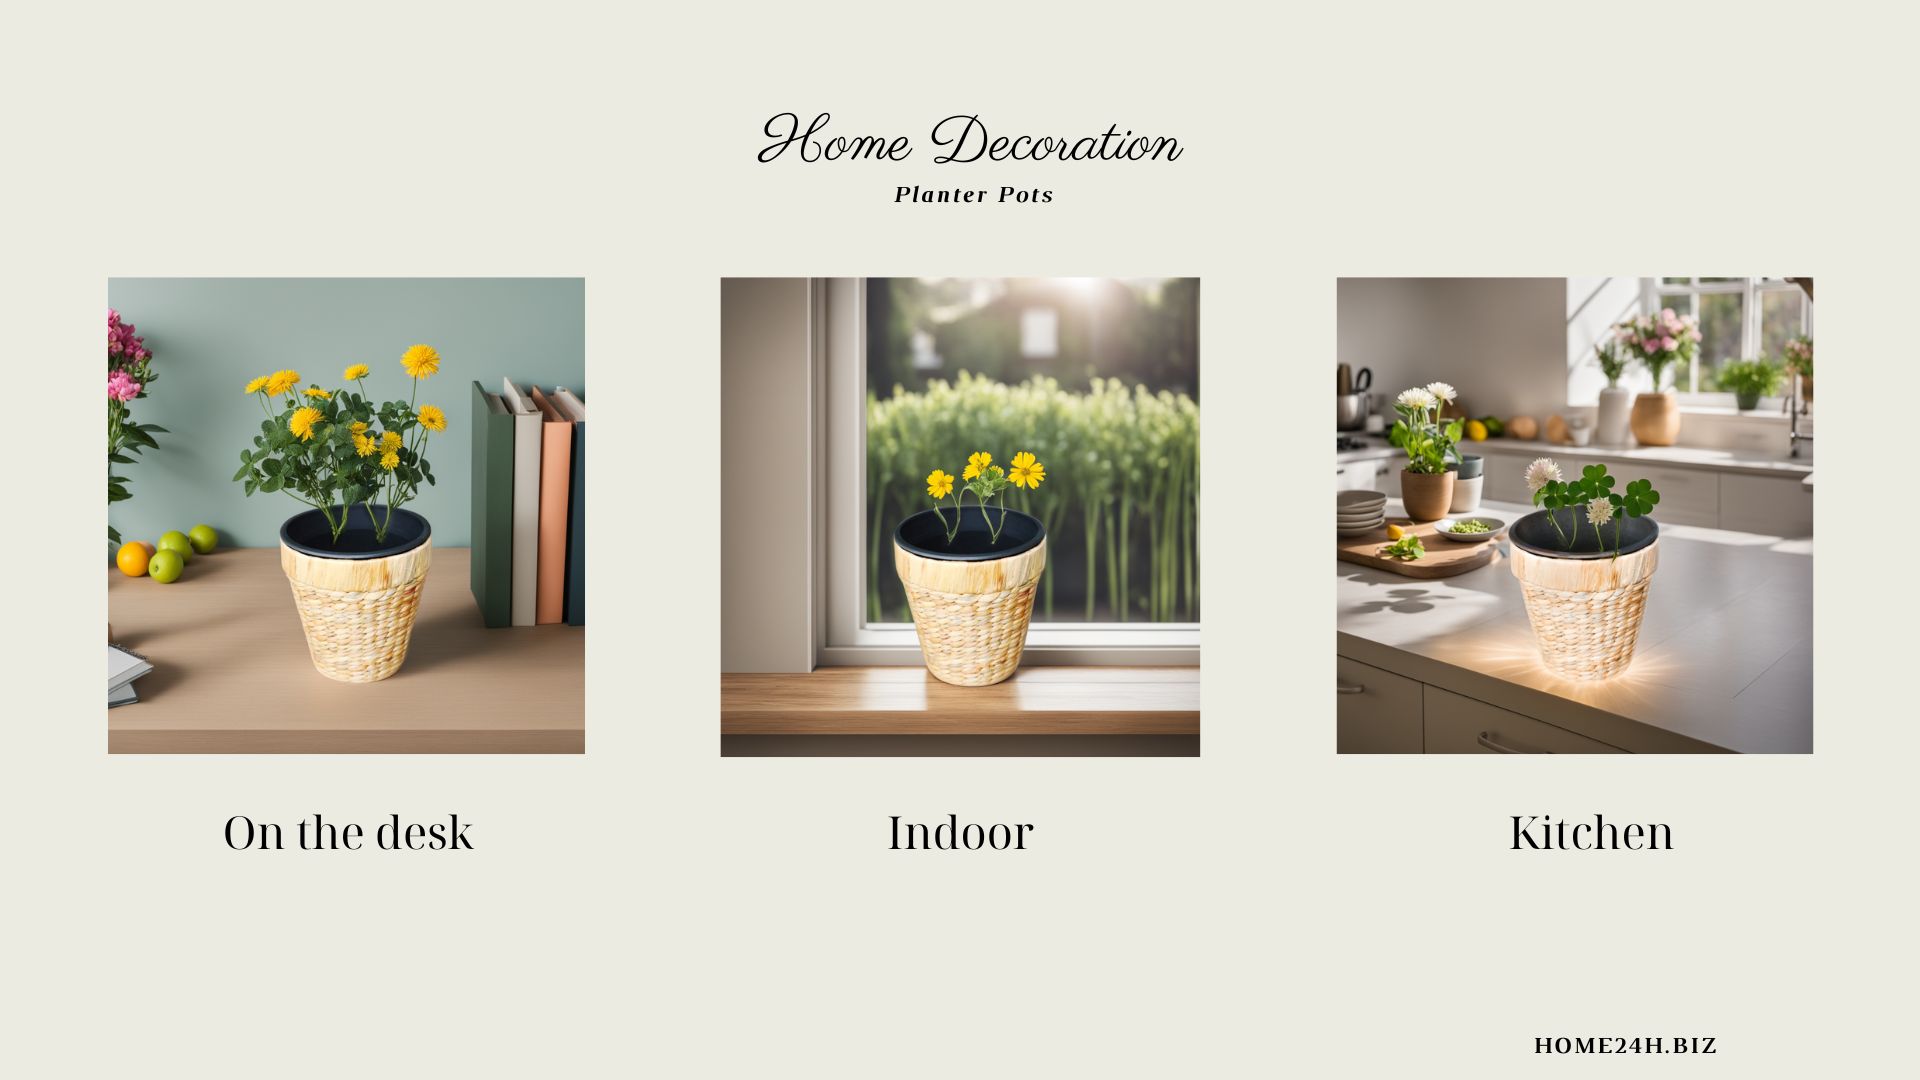 Planter Pots With Home Decoration